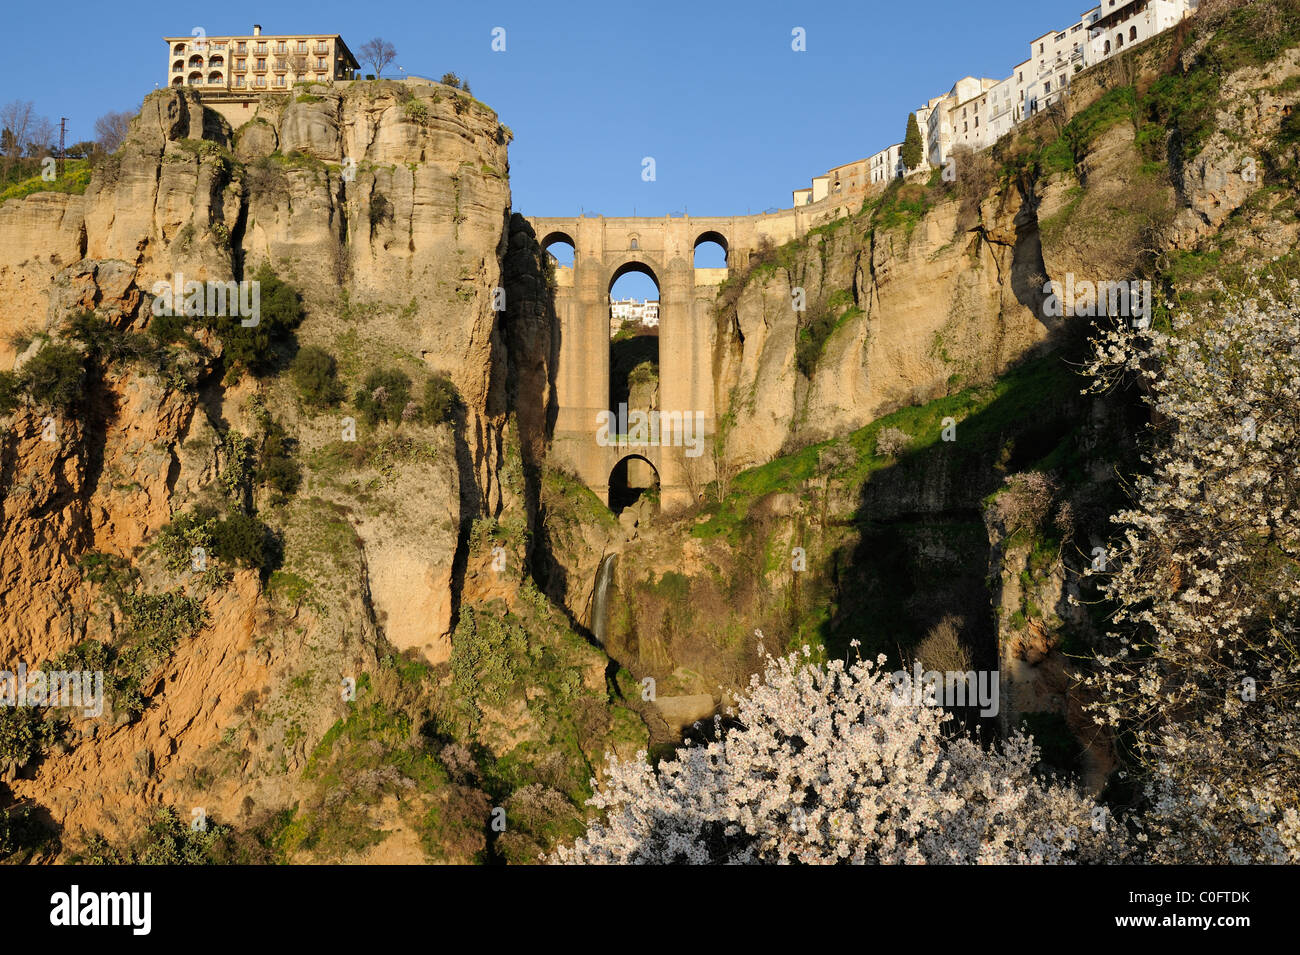 Ronda tajo sun drenched image Puente Nuevo Canyon Gorge inland 'costa del sol' Travel Andalucia Spain Stock Photo